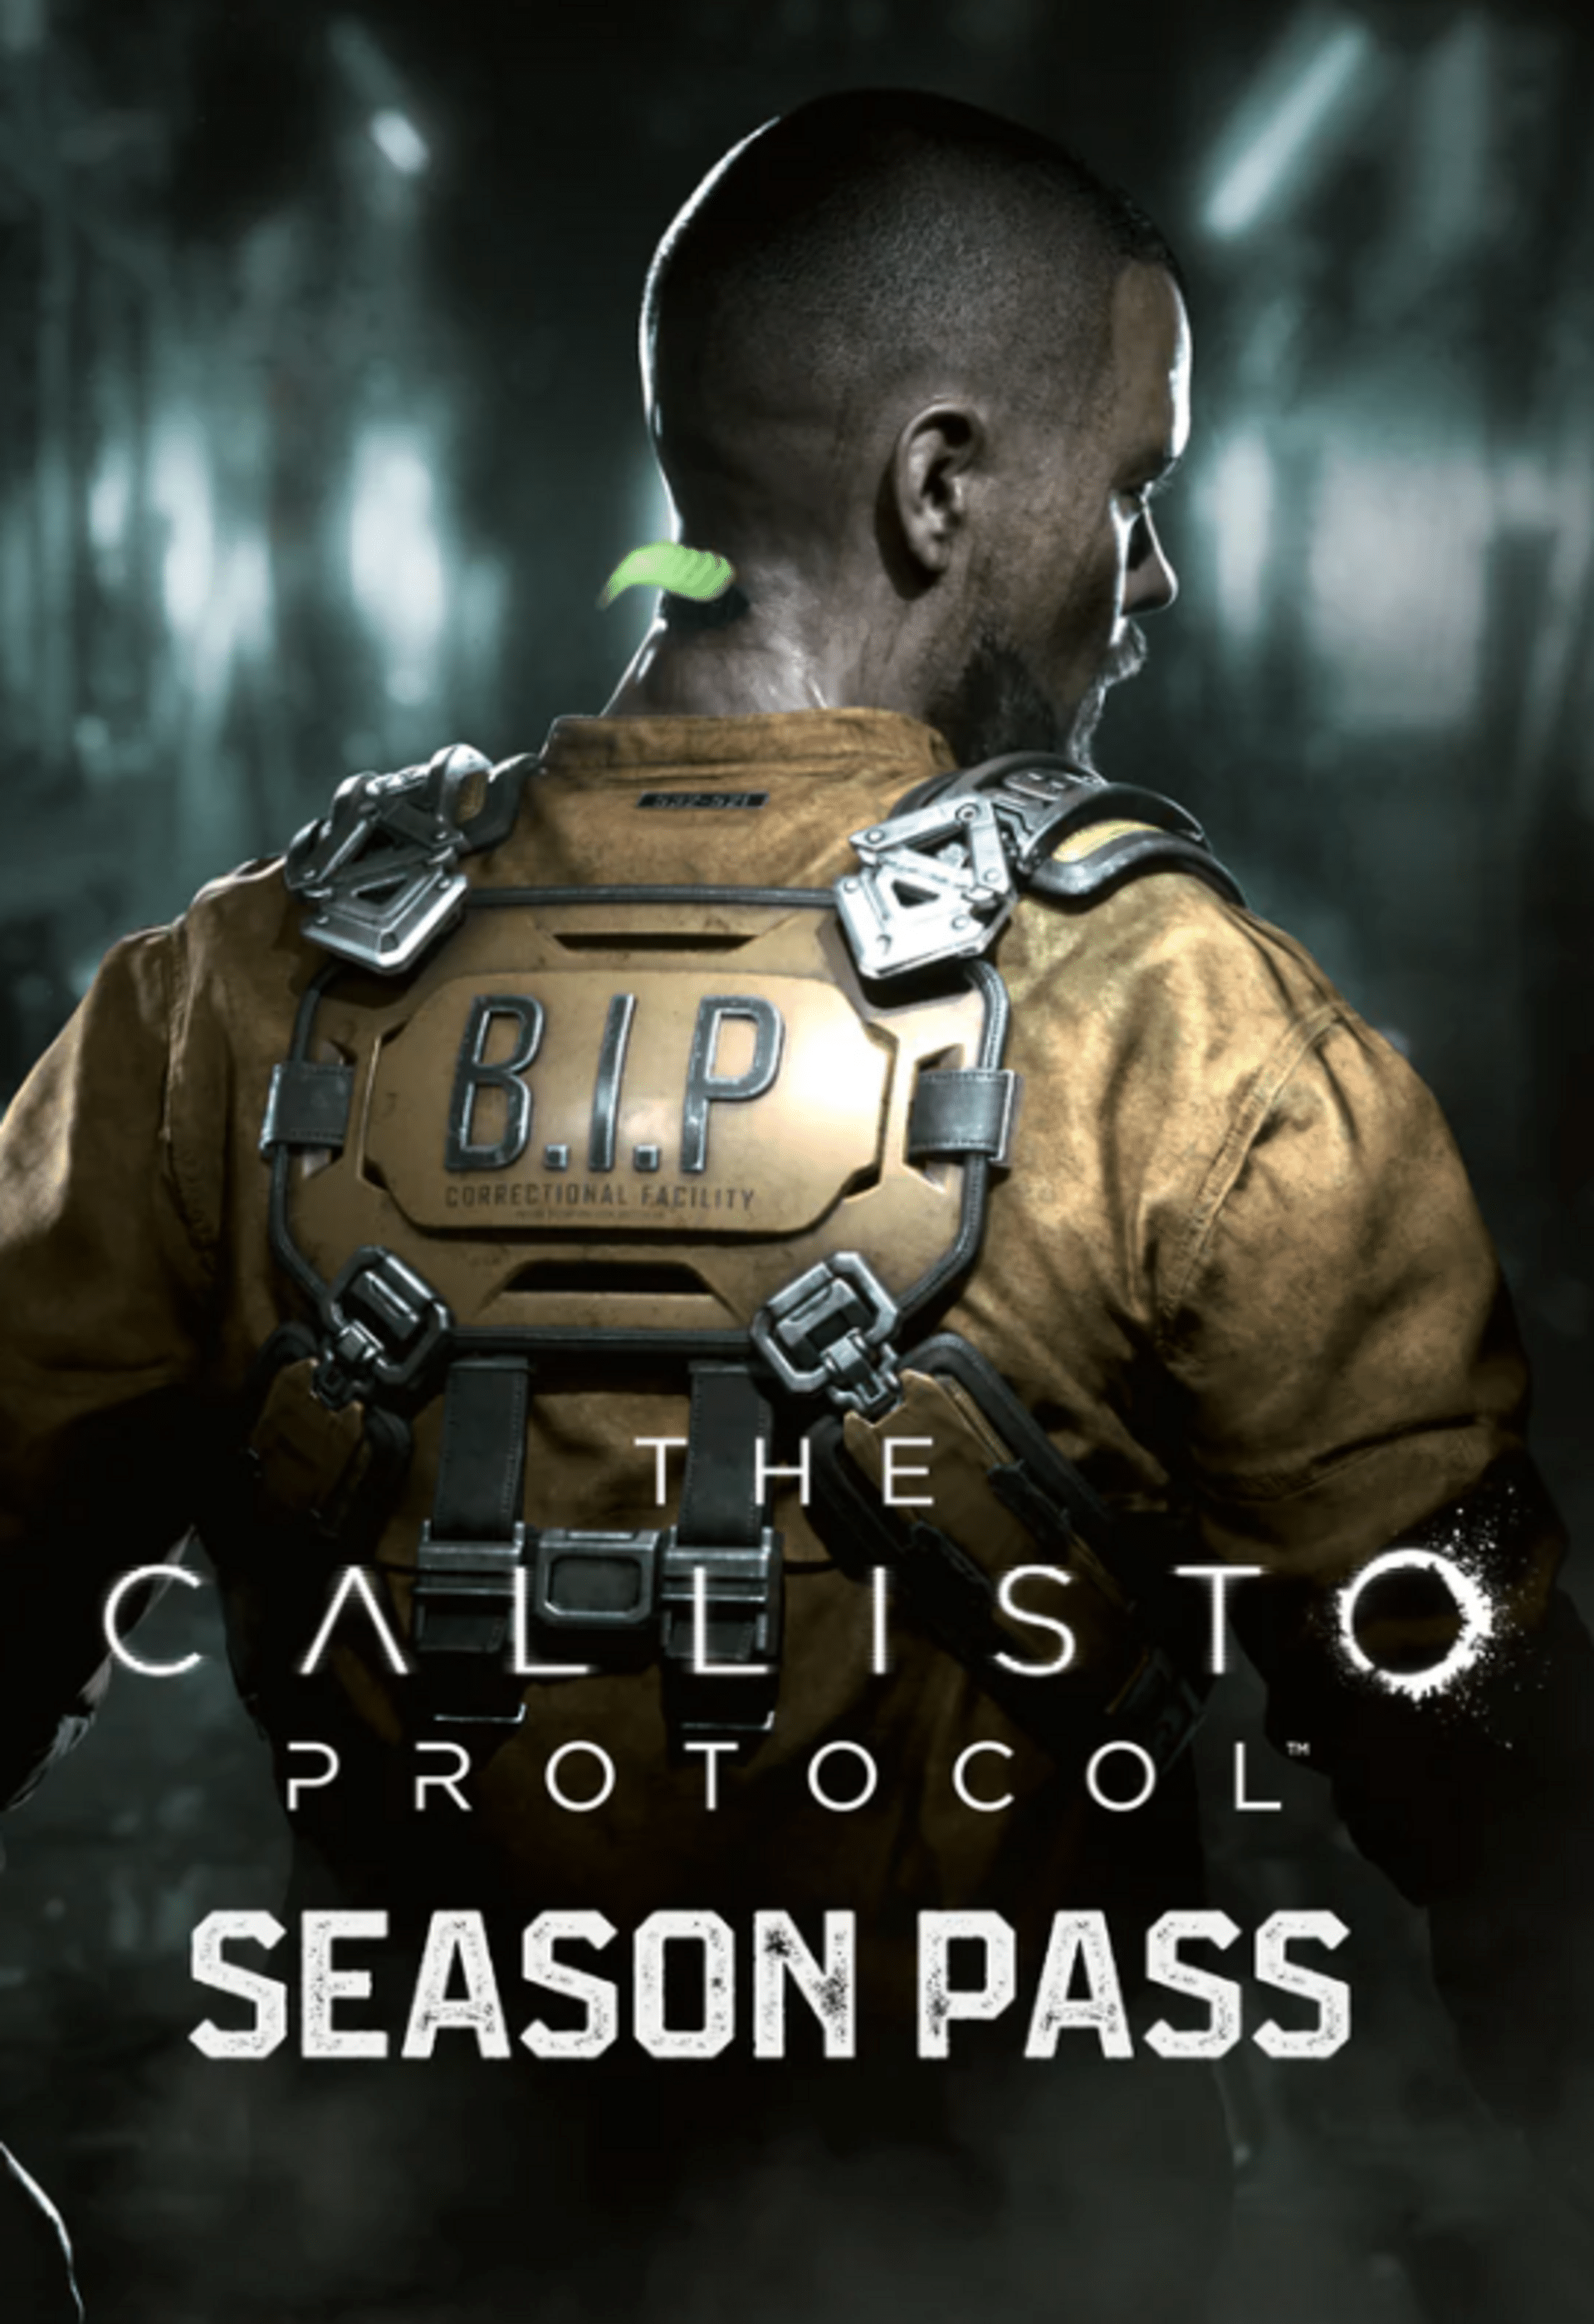 Buy The Callisto Protocol - Final Transmission (DLC) XBOX LIVE Key  ARGENTINA